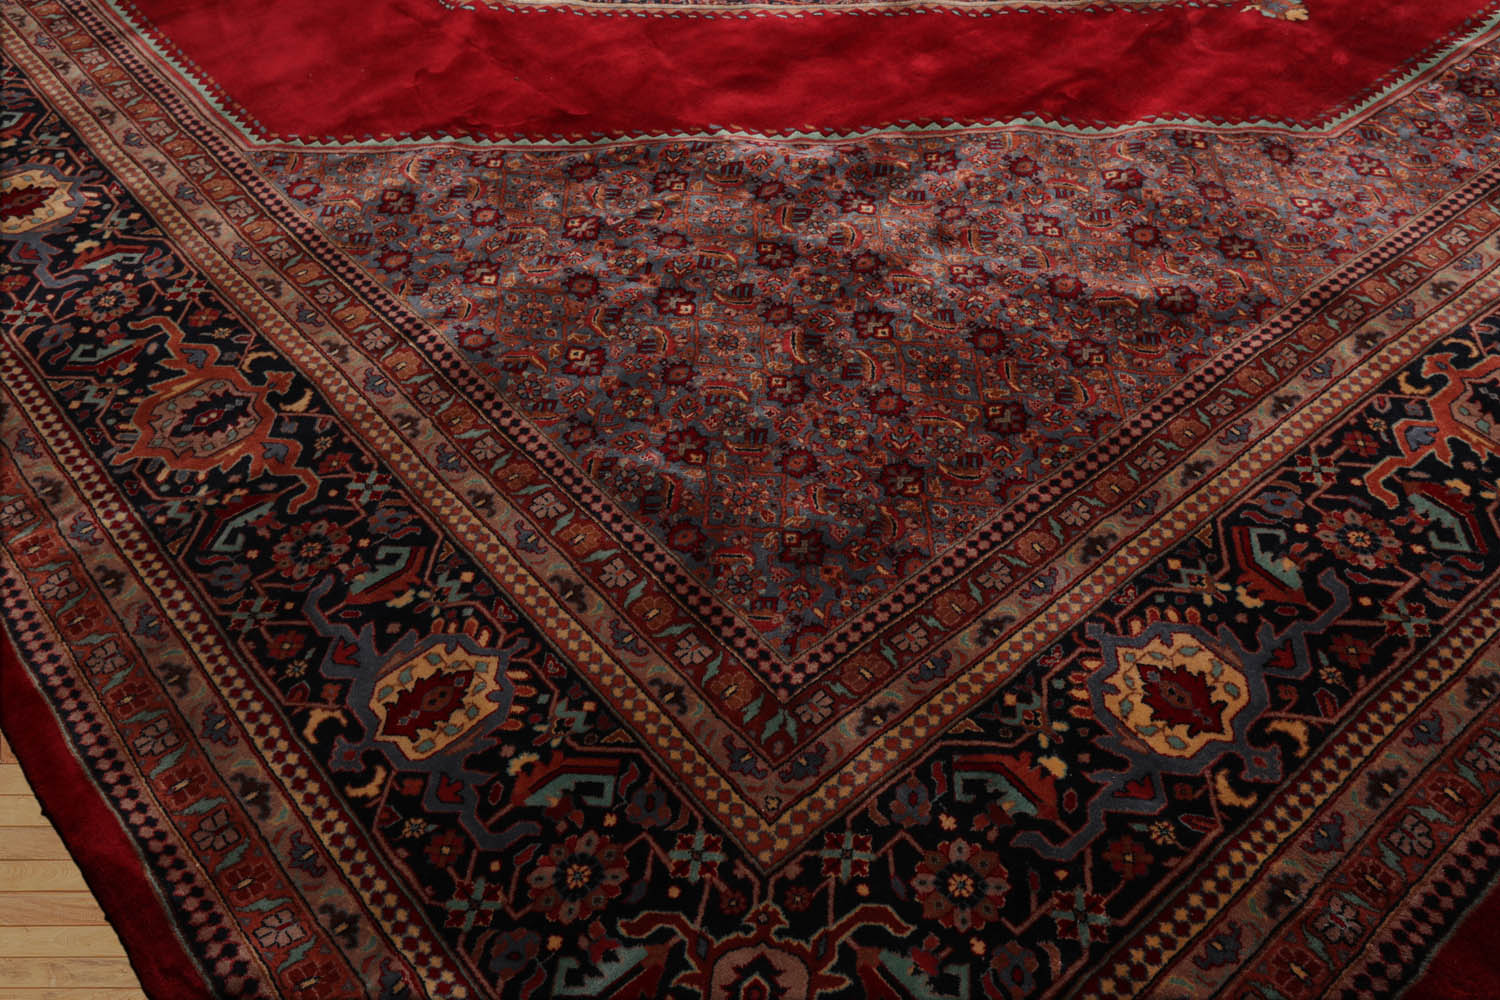 Aowyn Palace Hand Knotted Persian 100% Wool 250 KPSI Bidjar Traditional  Oriental Area Rug Cinnamon,Navy Color